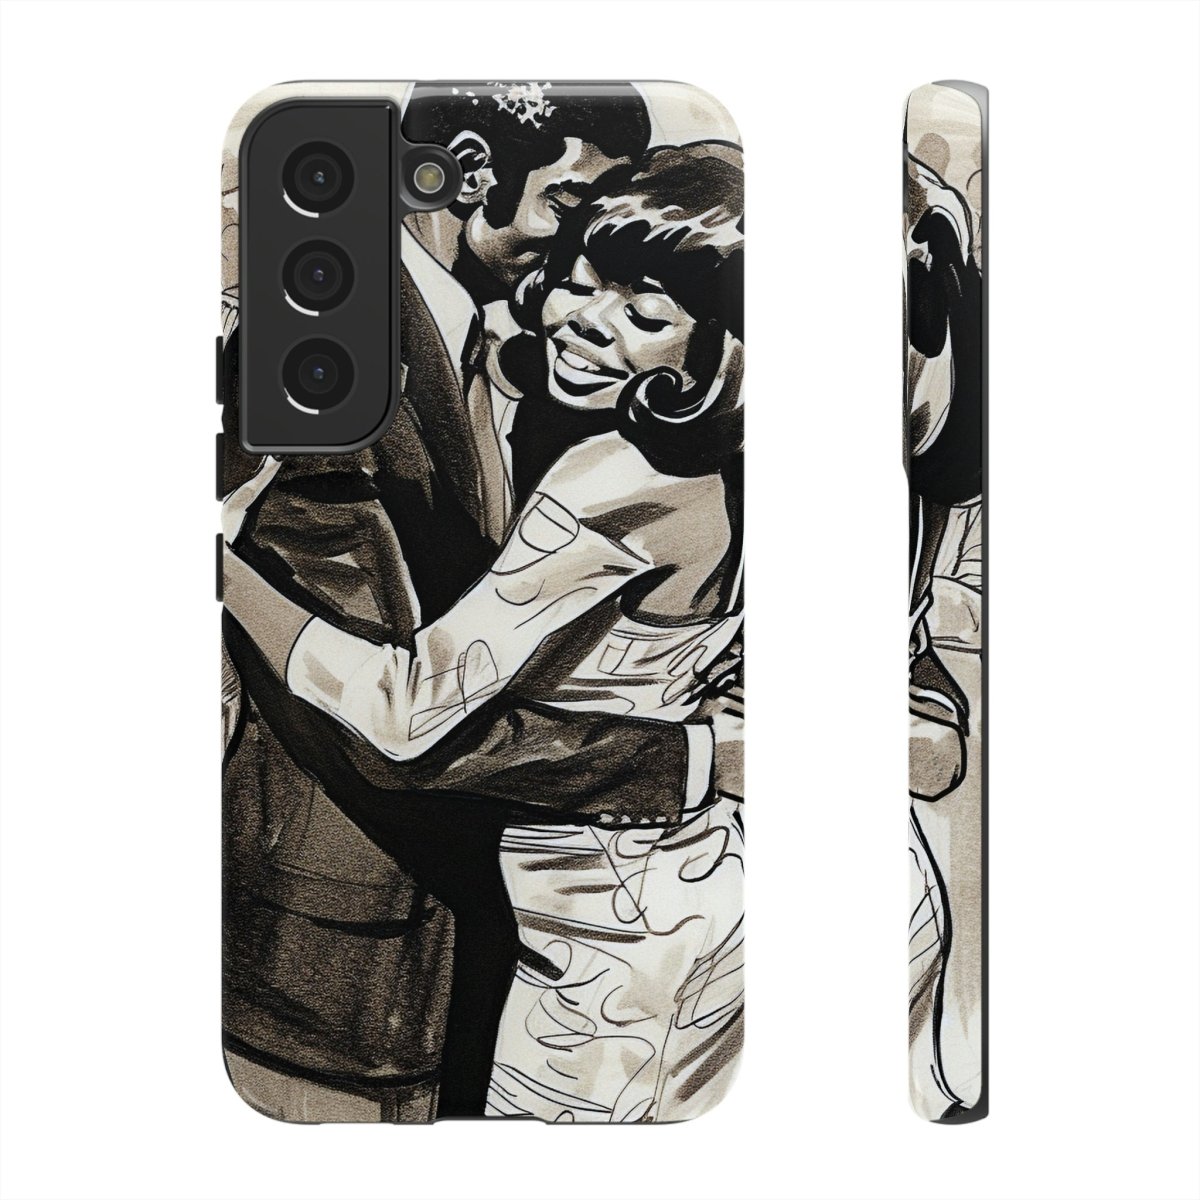 Vintage Hug Phone Case - The Trini Gee